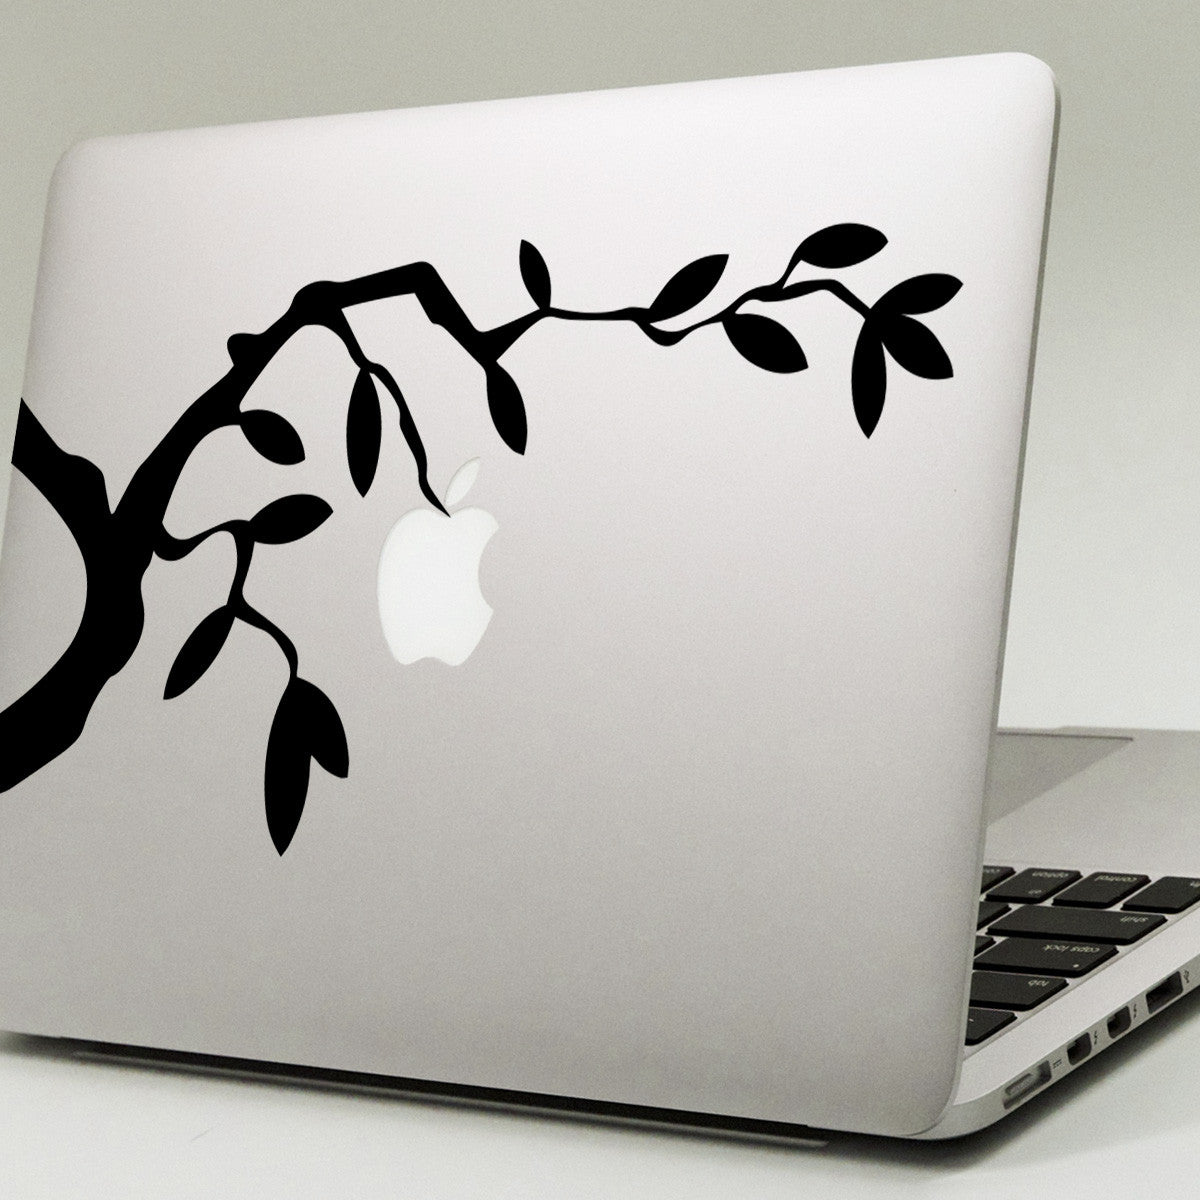 Apple Tree Macbook Decal